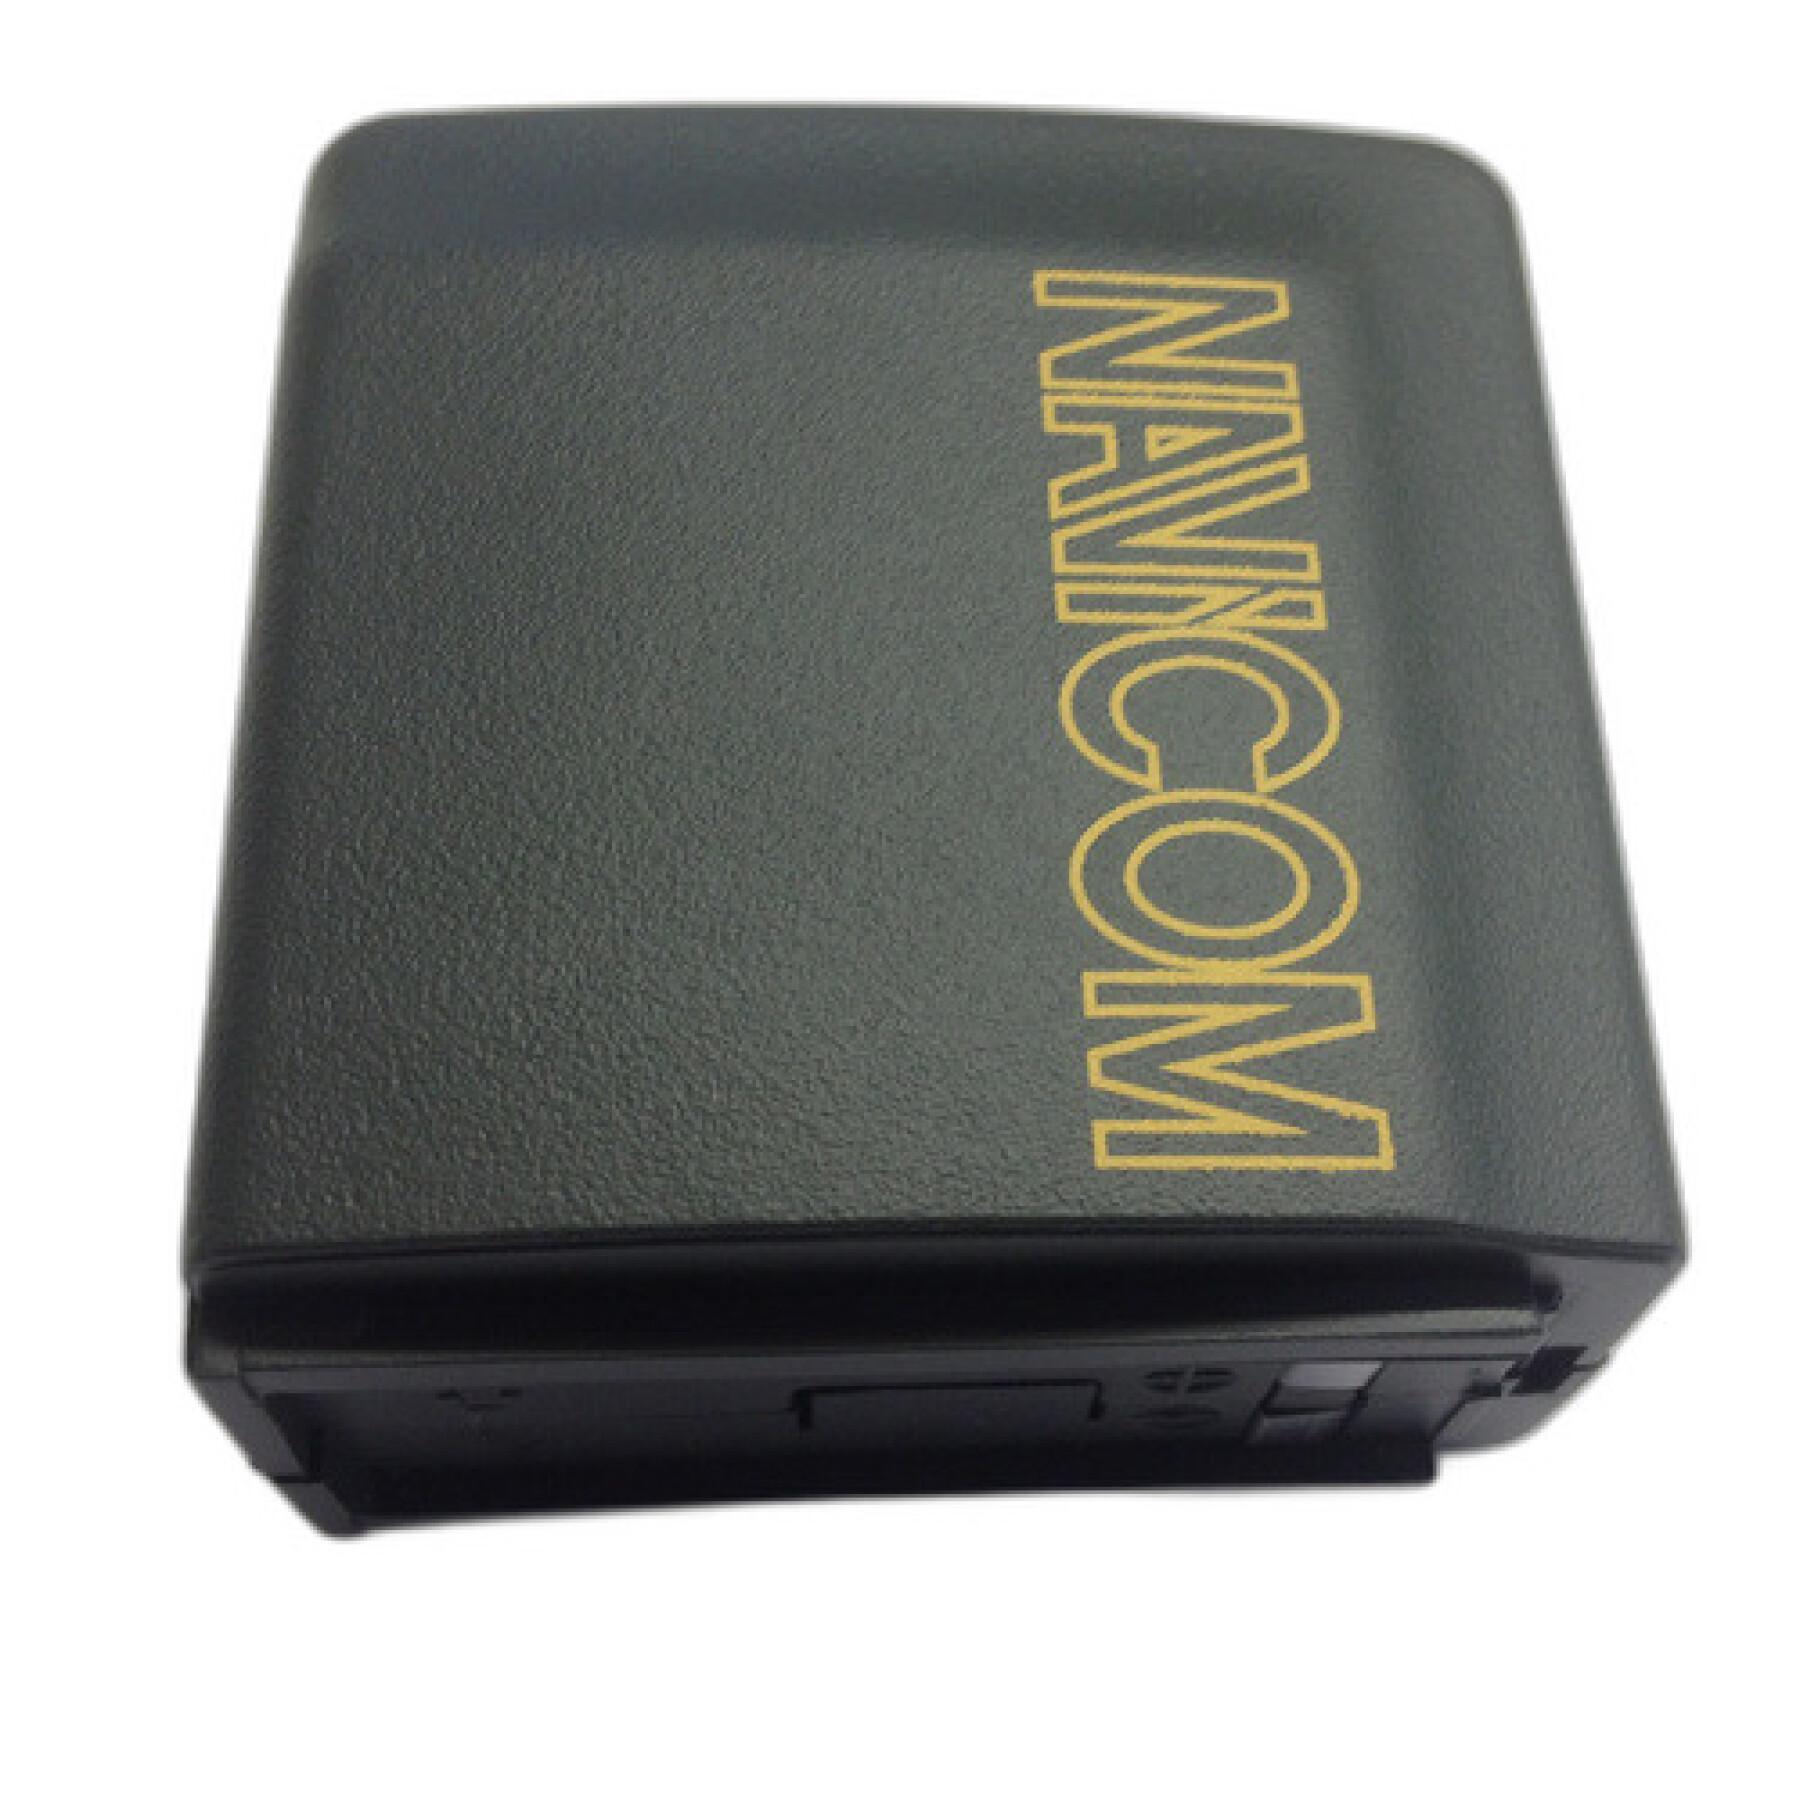 Cajas y autres para almacenar pilas alcalinas para rt210/rt211c - fin de producción Navicom RT210/RT211C